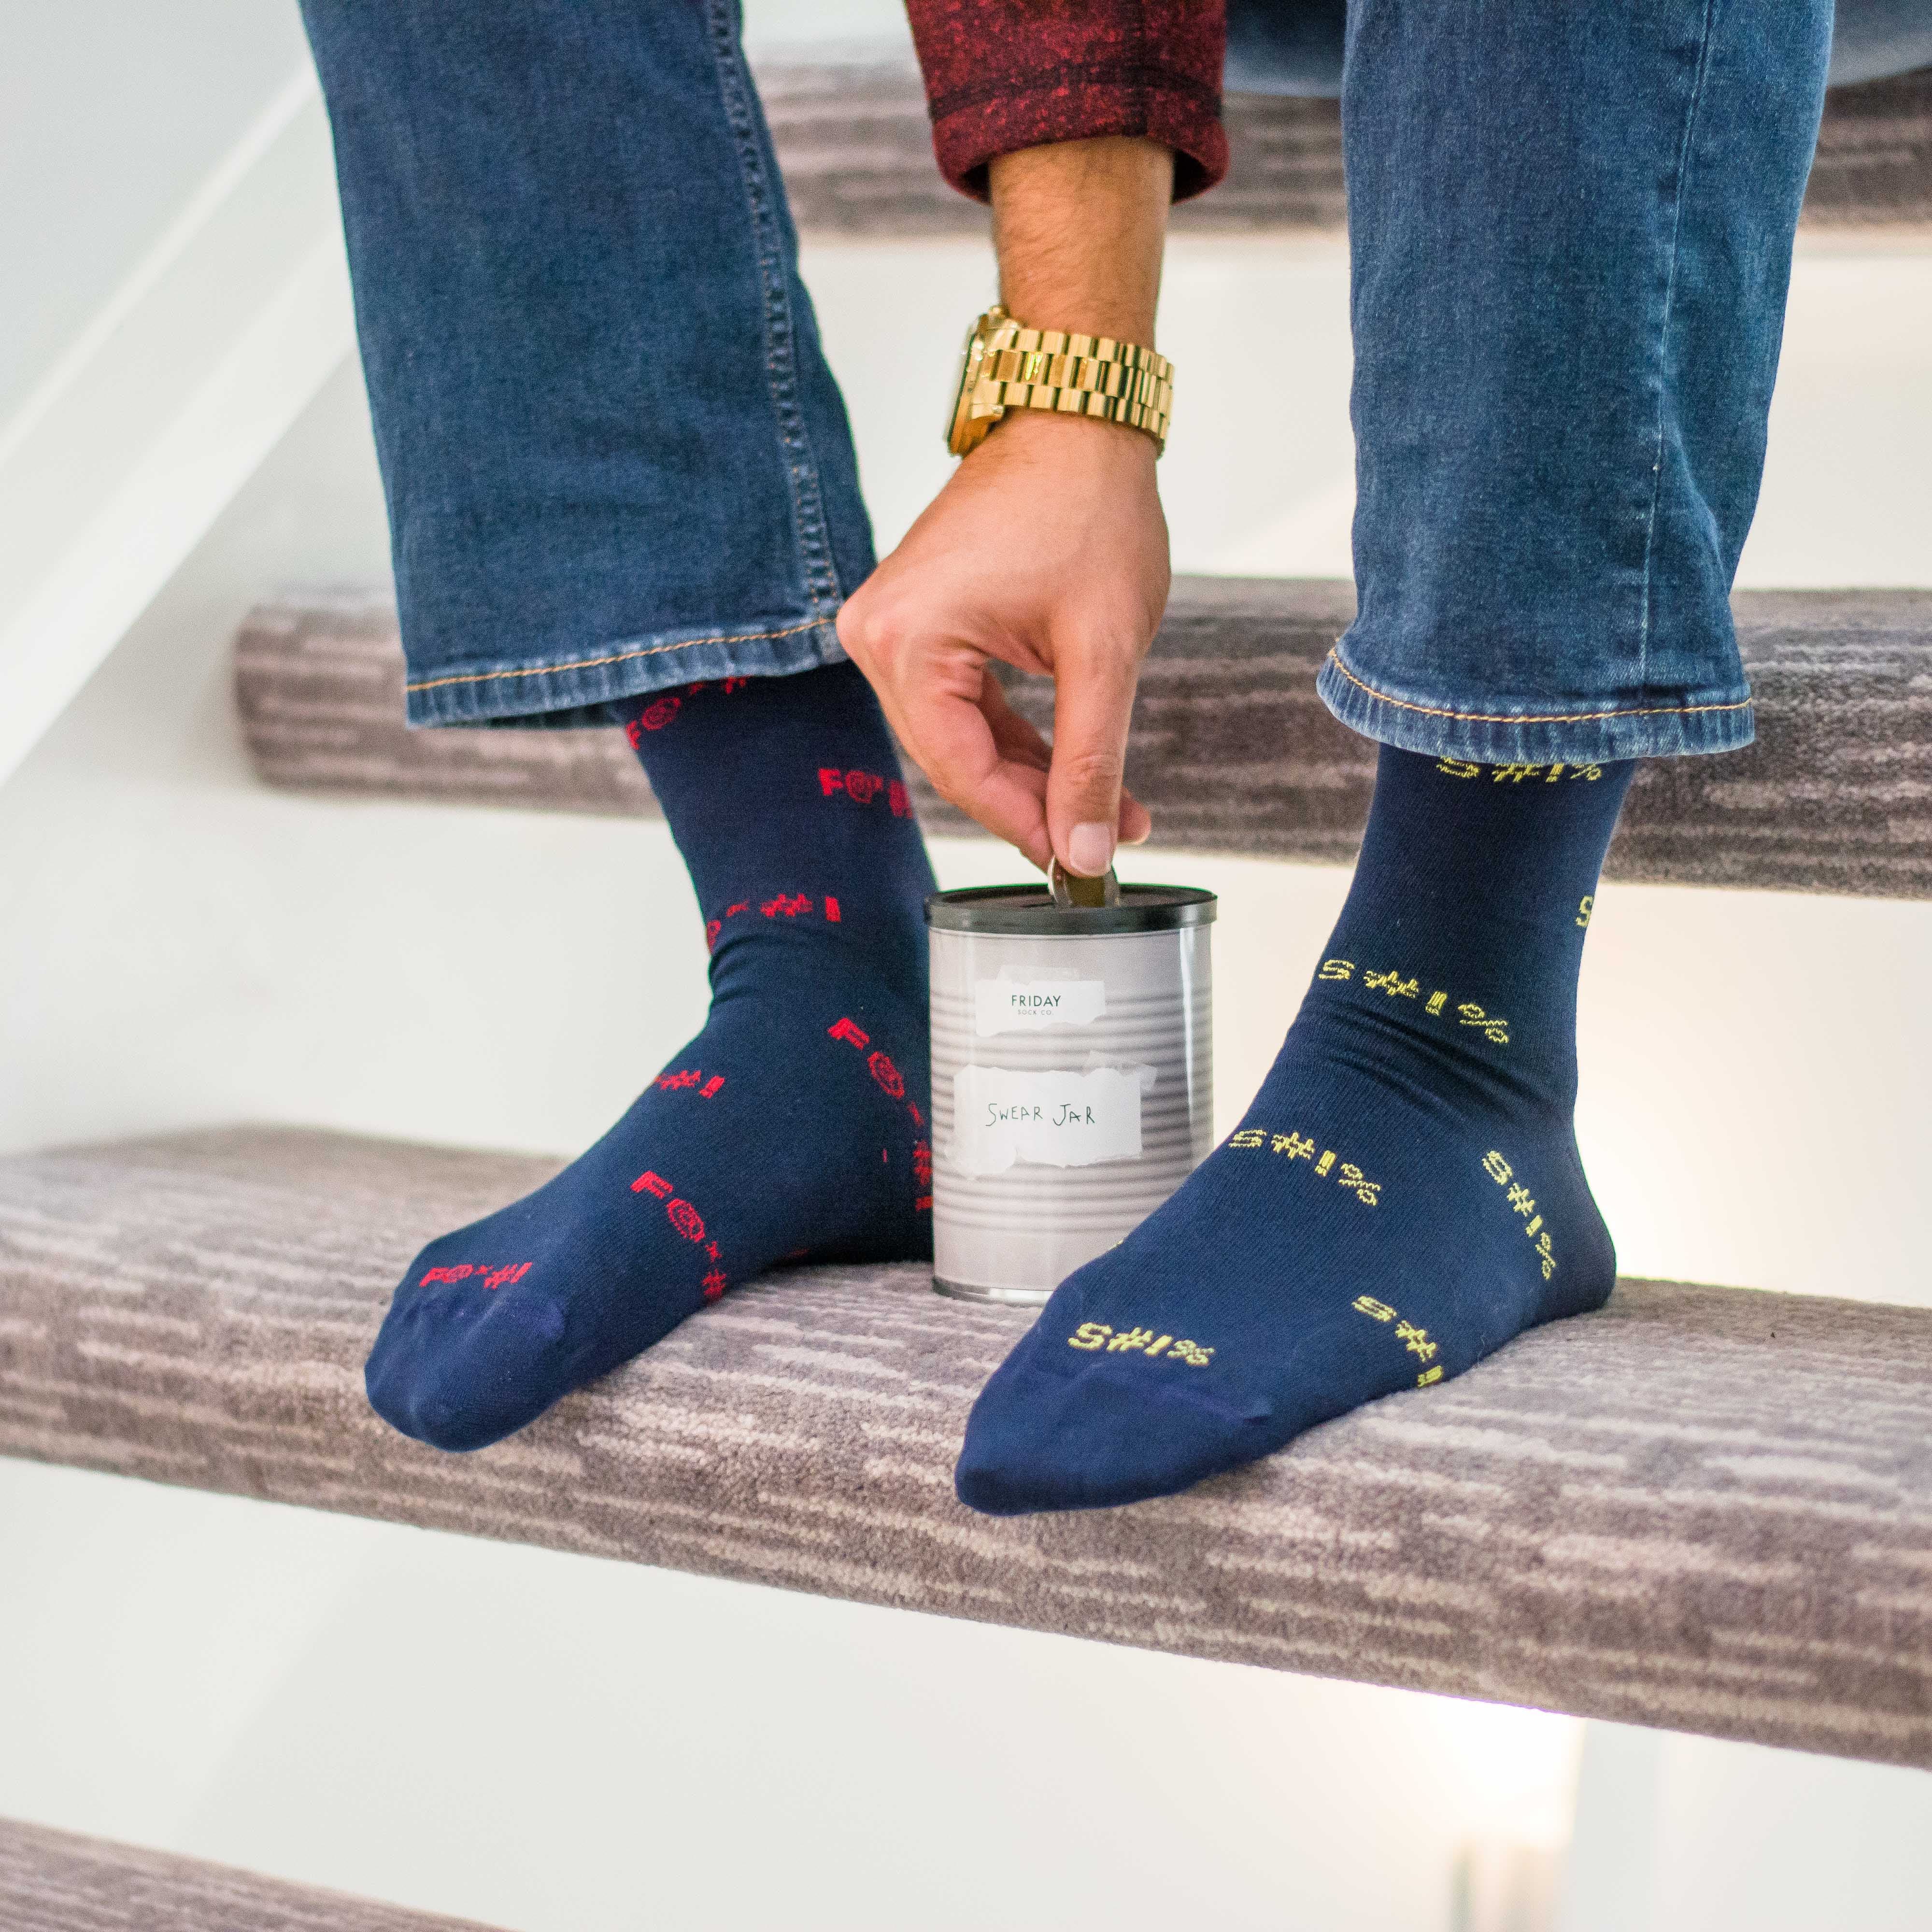 Men's Swear Jar Socks in Can | Mismatched by Design | Friday Sock Co.